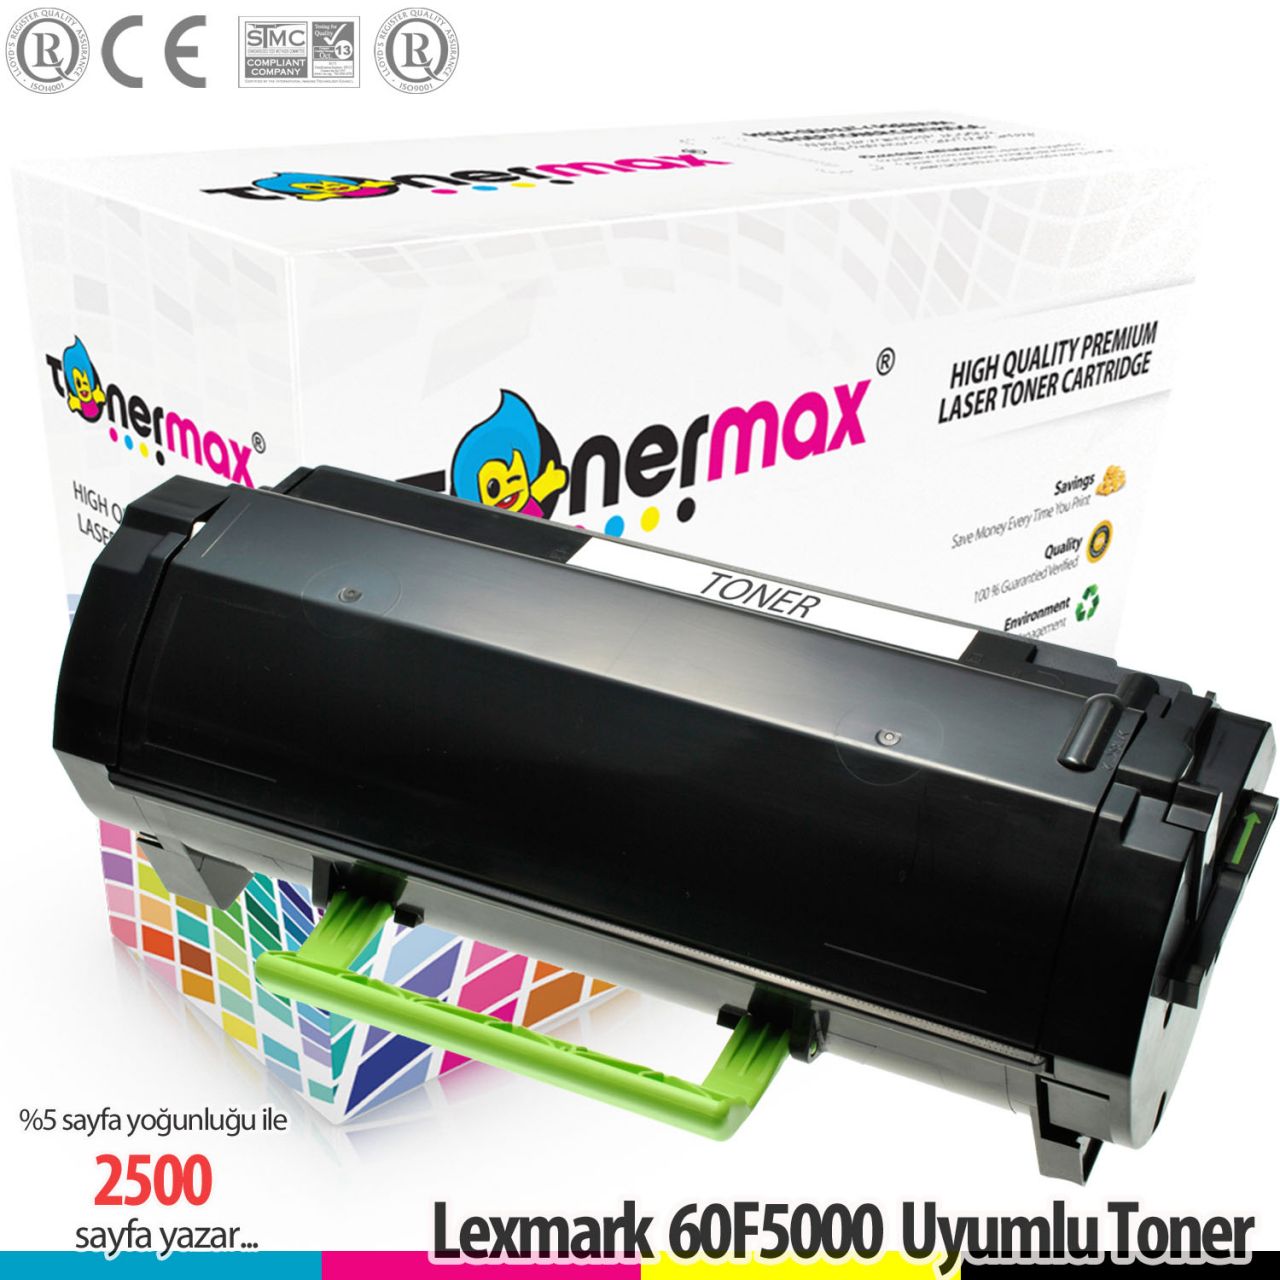 Lexmark 605 / 60F5000 / MX310 / MX410 / MX510 / MX511 / MX611 Muadil Toner